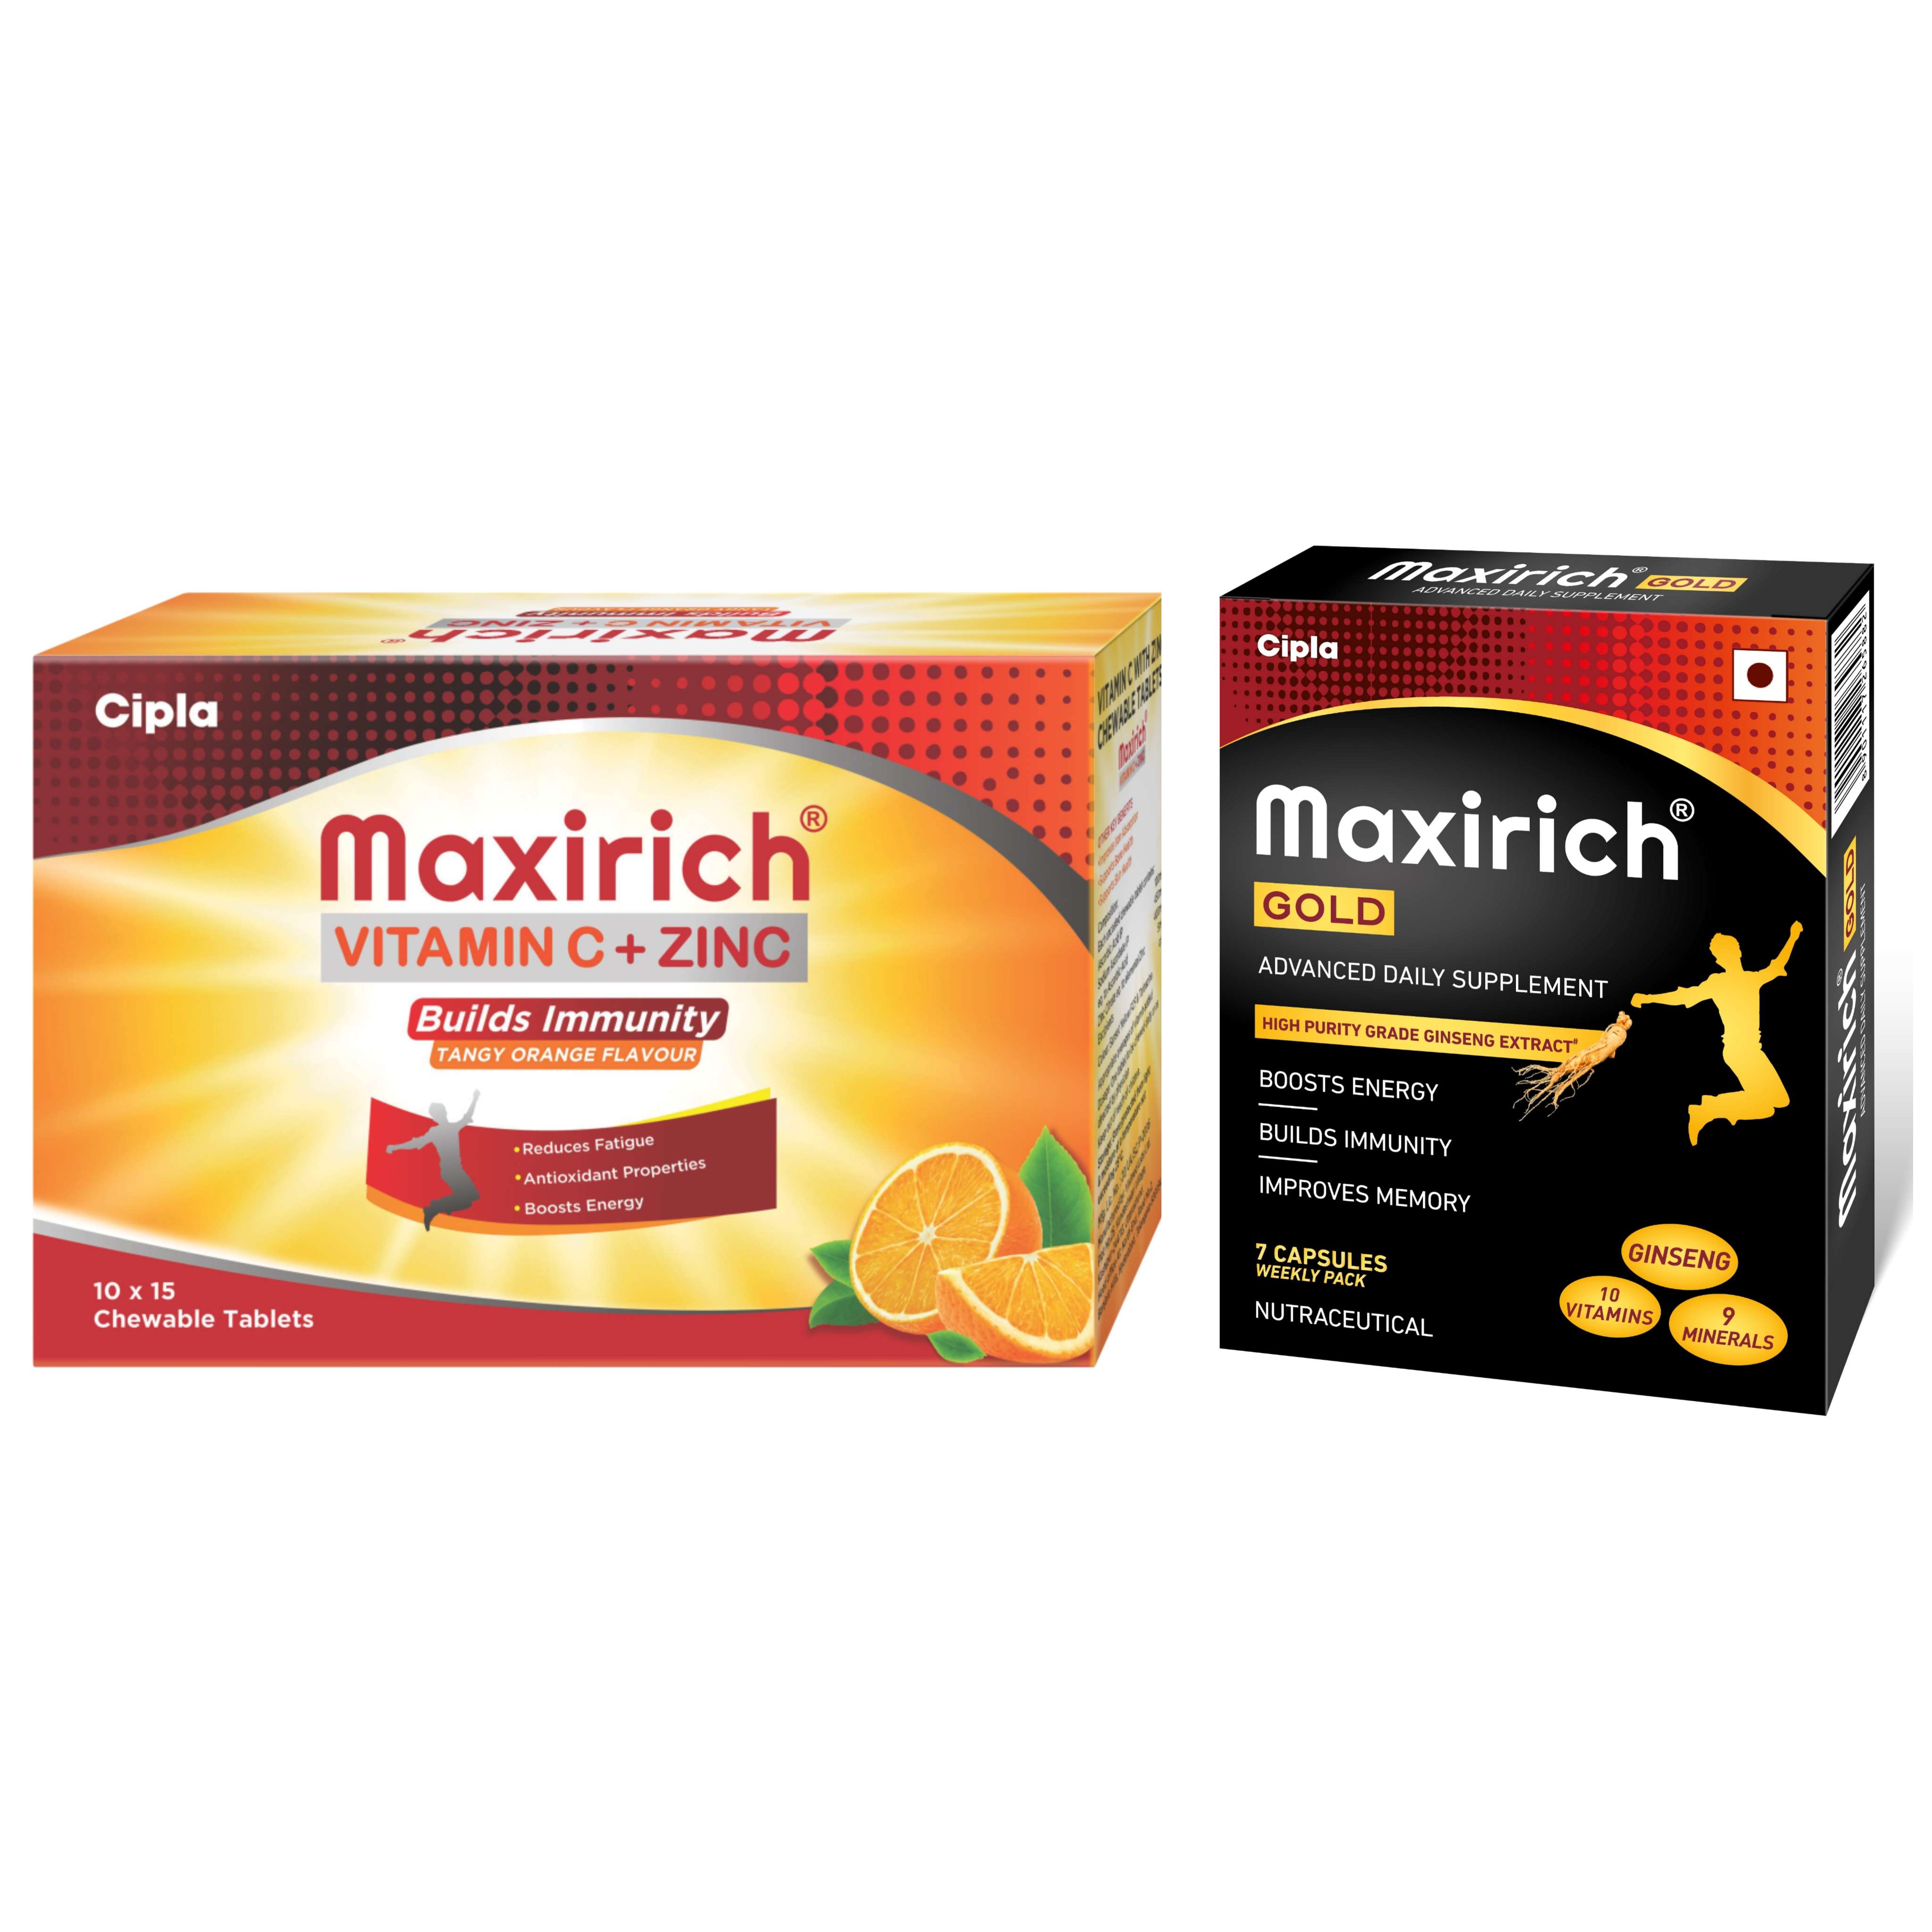 Cipla Health Launches Maxirich Vitamin C Zinc Chewable Tablets And Maxirich Gold Supplement Health News Et Healthworld